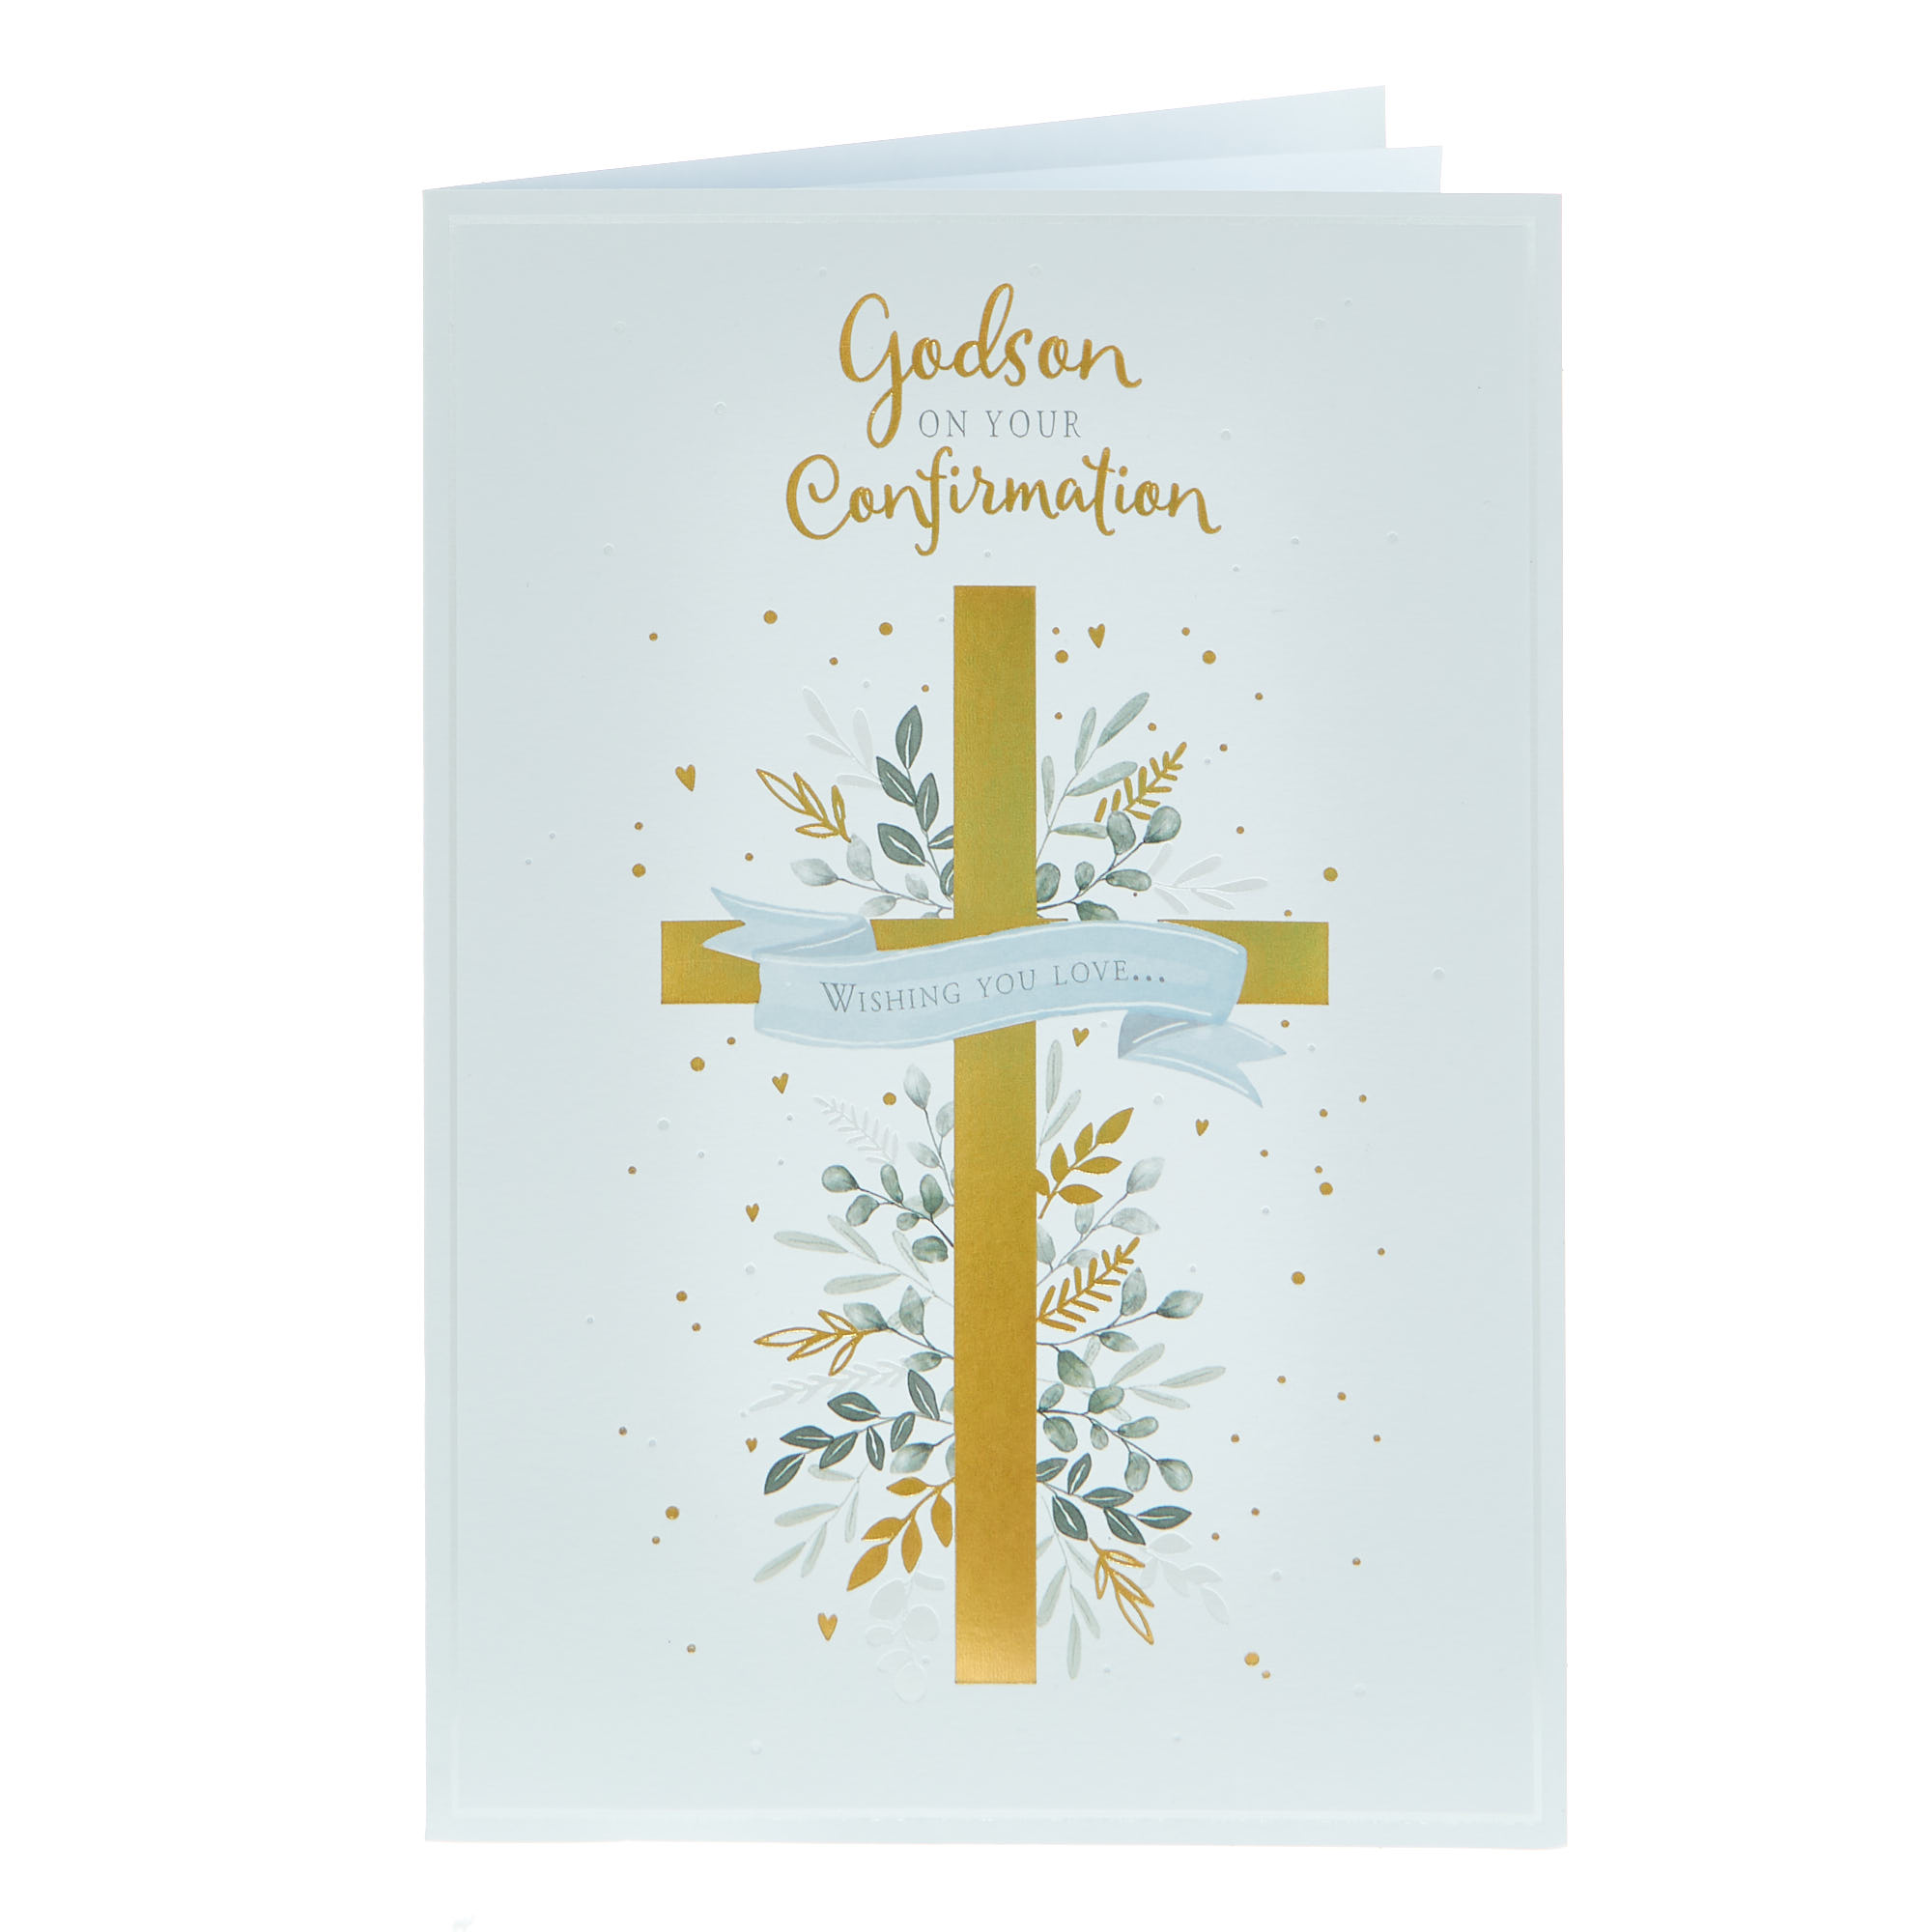 Confirmation Card - Godson Wishing You Love